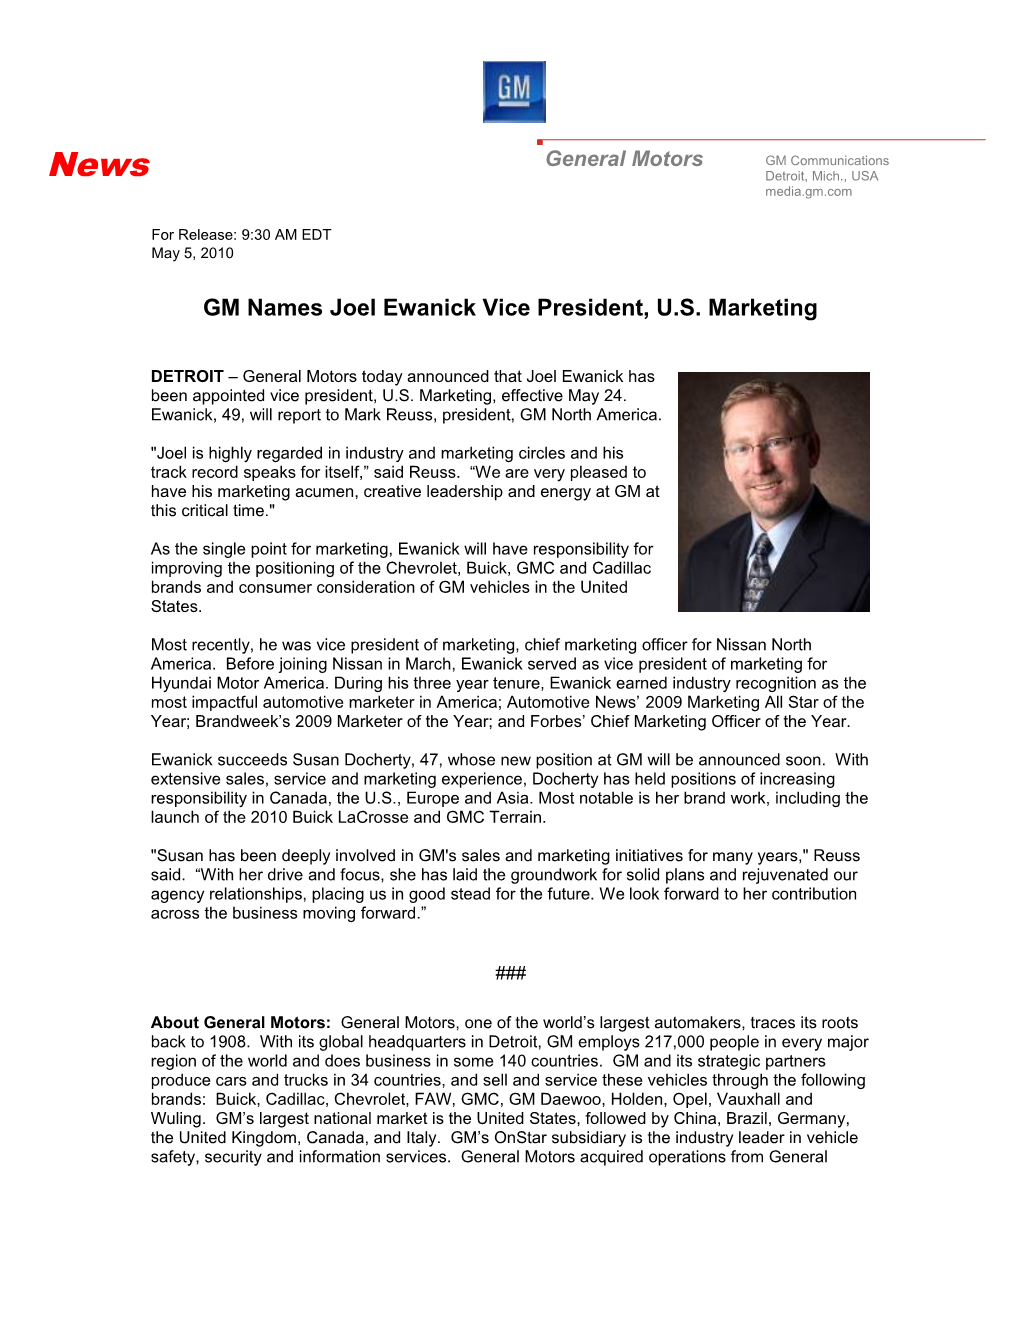 General Motors Press Release s1